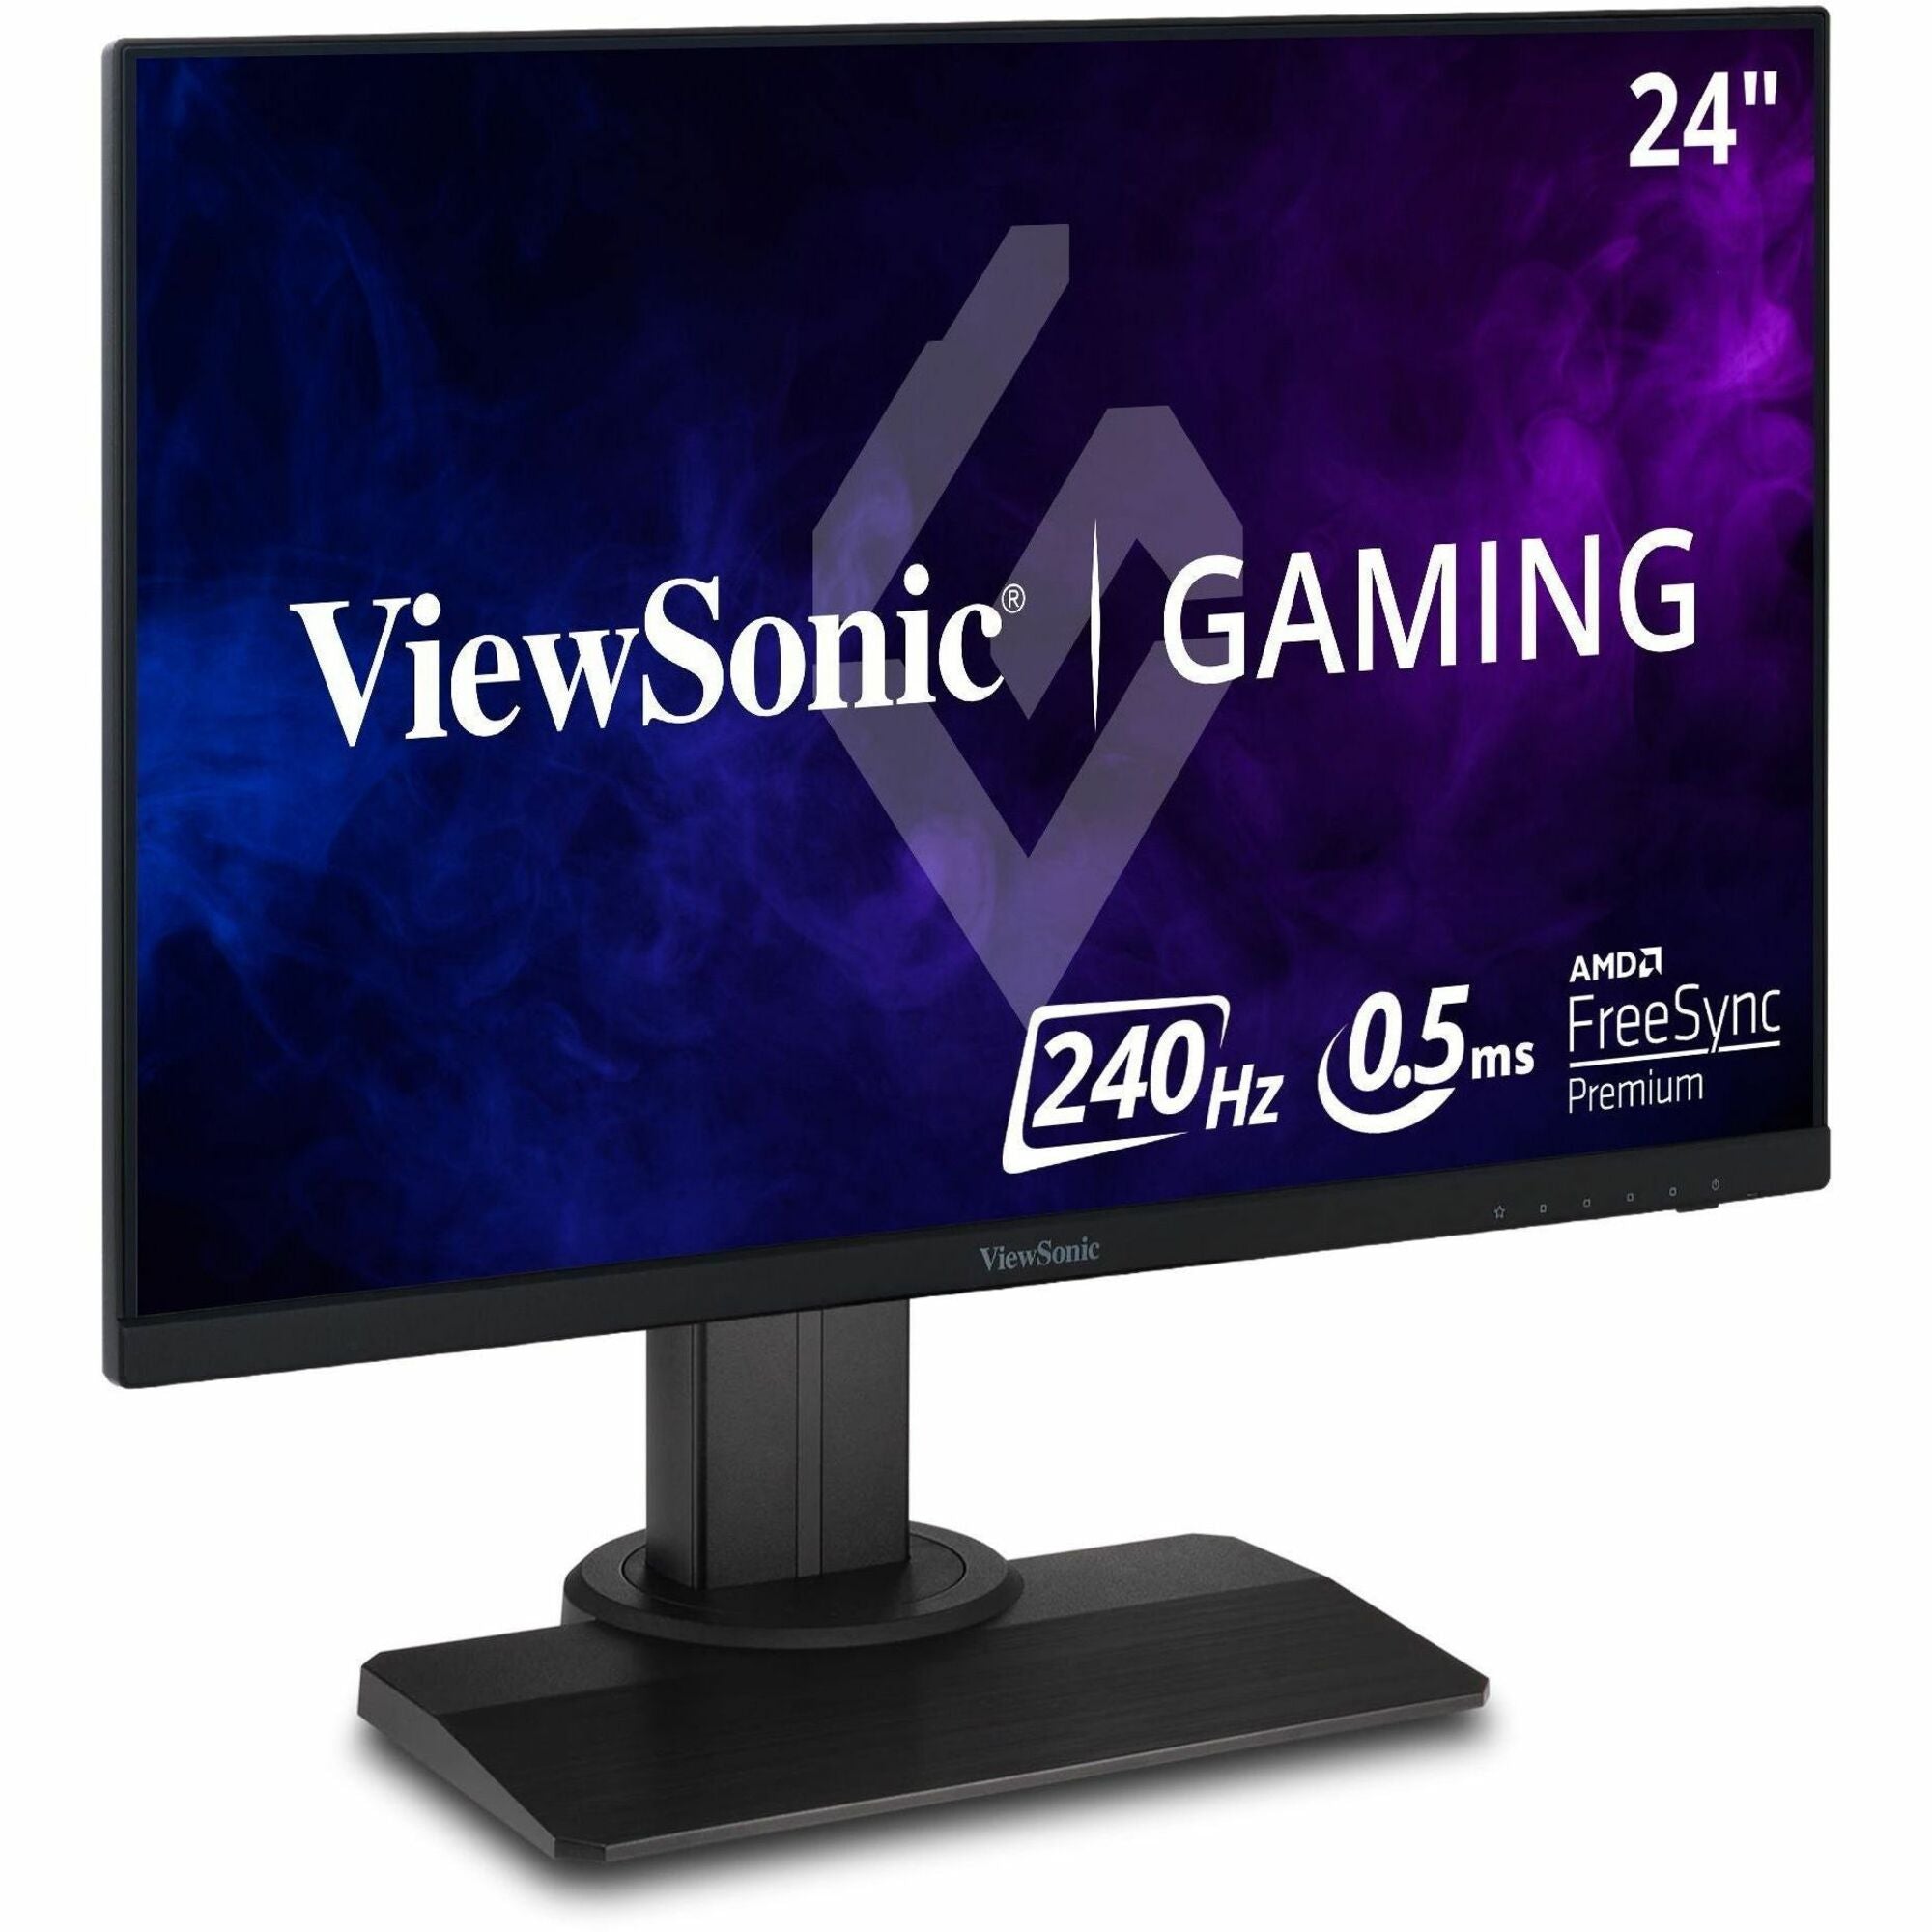 ViewSonic OMNI XG2431 24 Inch 1080p 0.5ms 240Hz Gaming Monitor with AMD FreeSync Premium, Advanced Ergonomics, Eye Care, HDMI and DisplayPort for Esports - XG2431